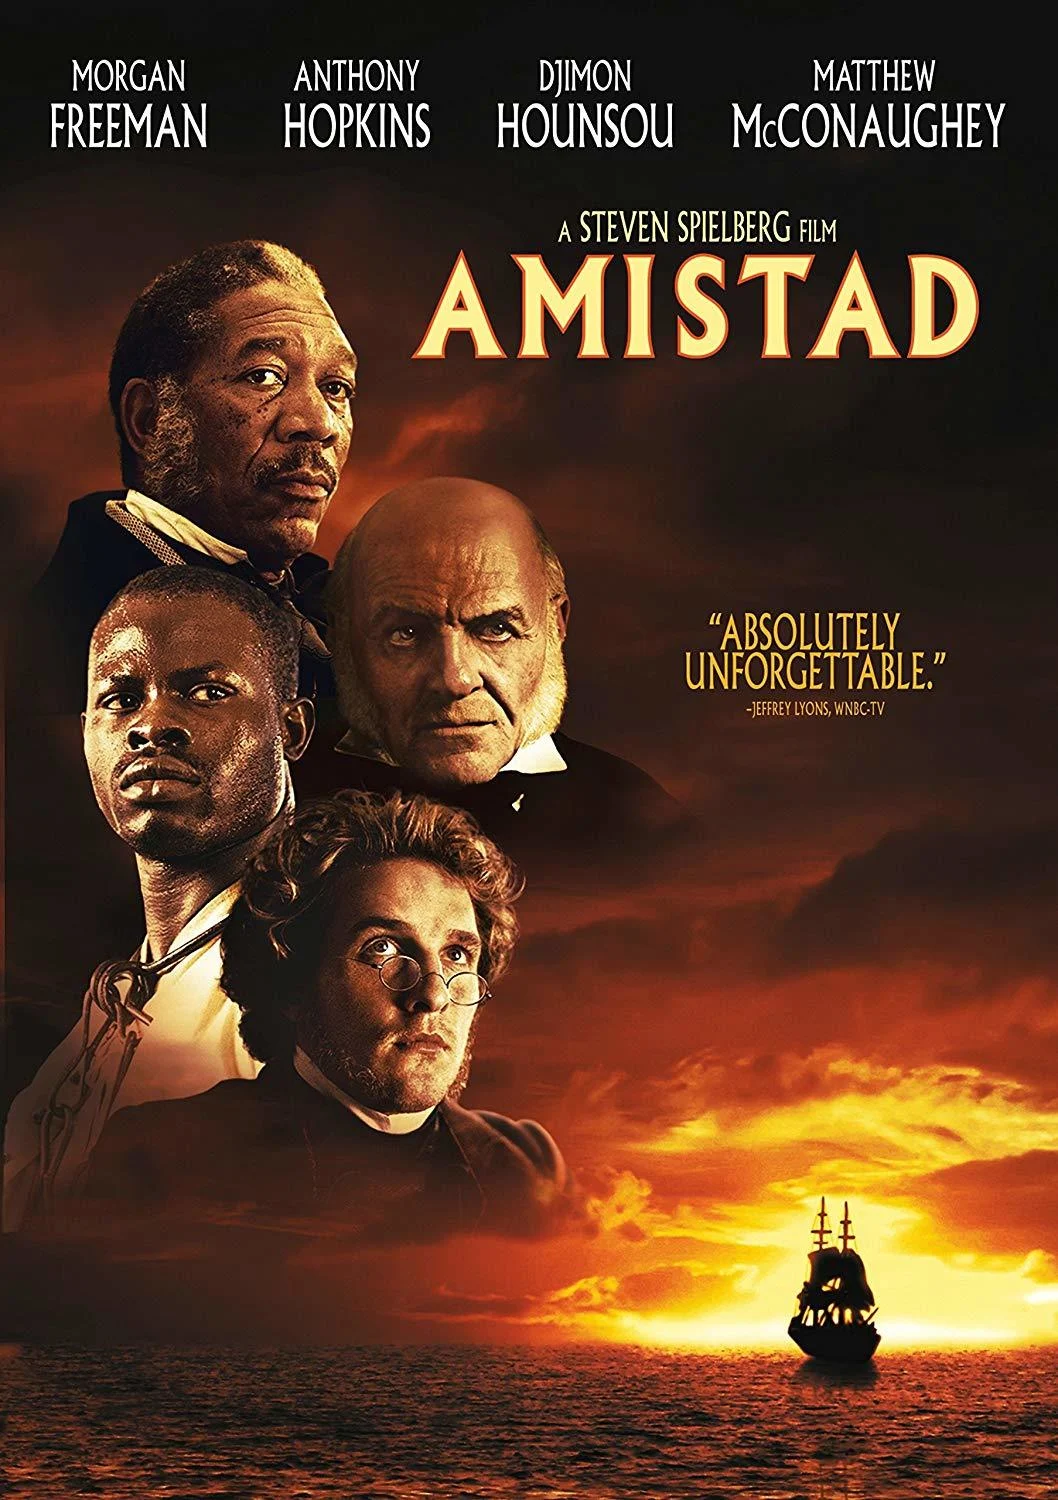 Amistad (DVD)